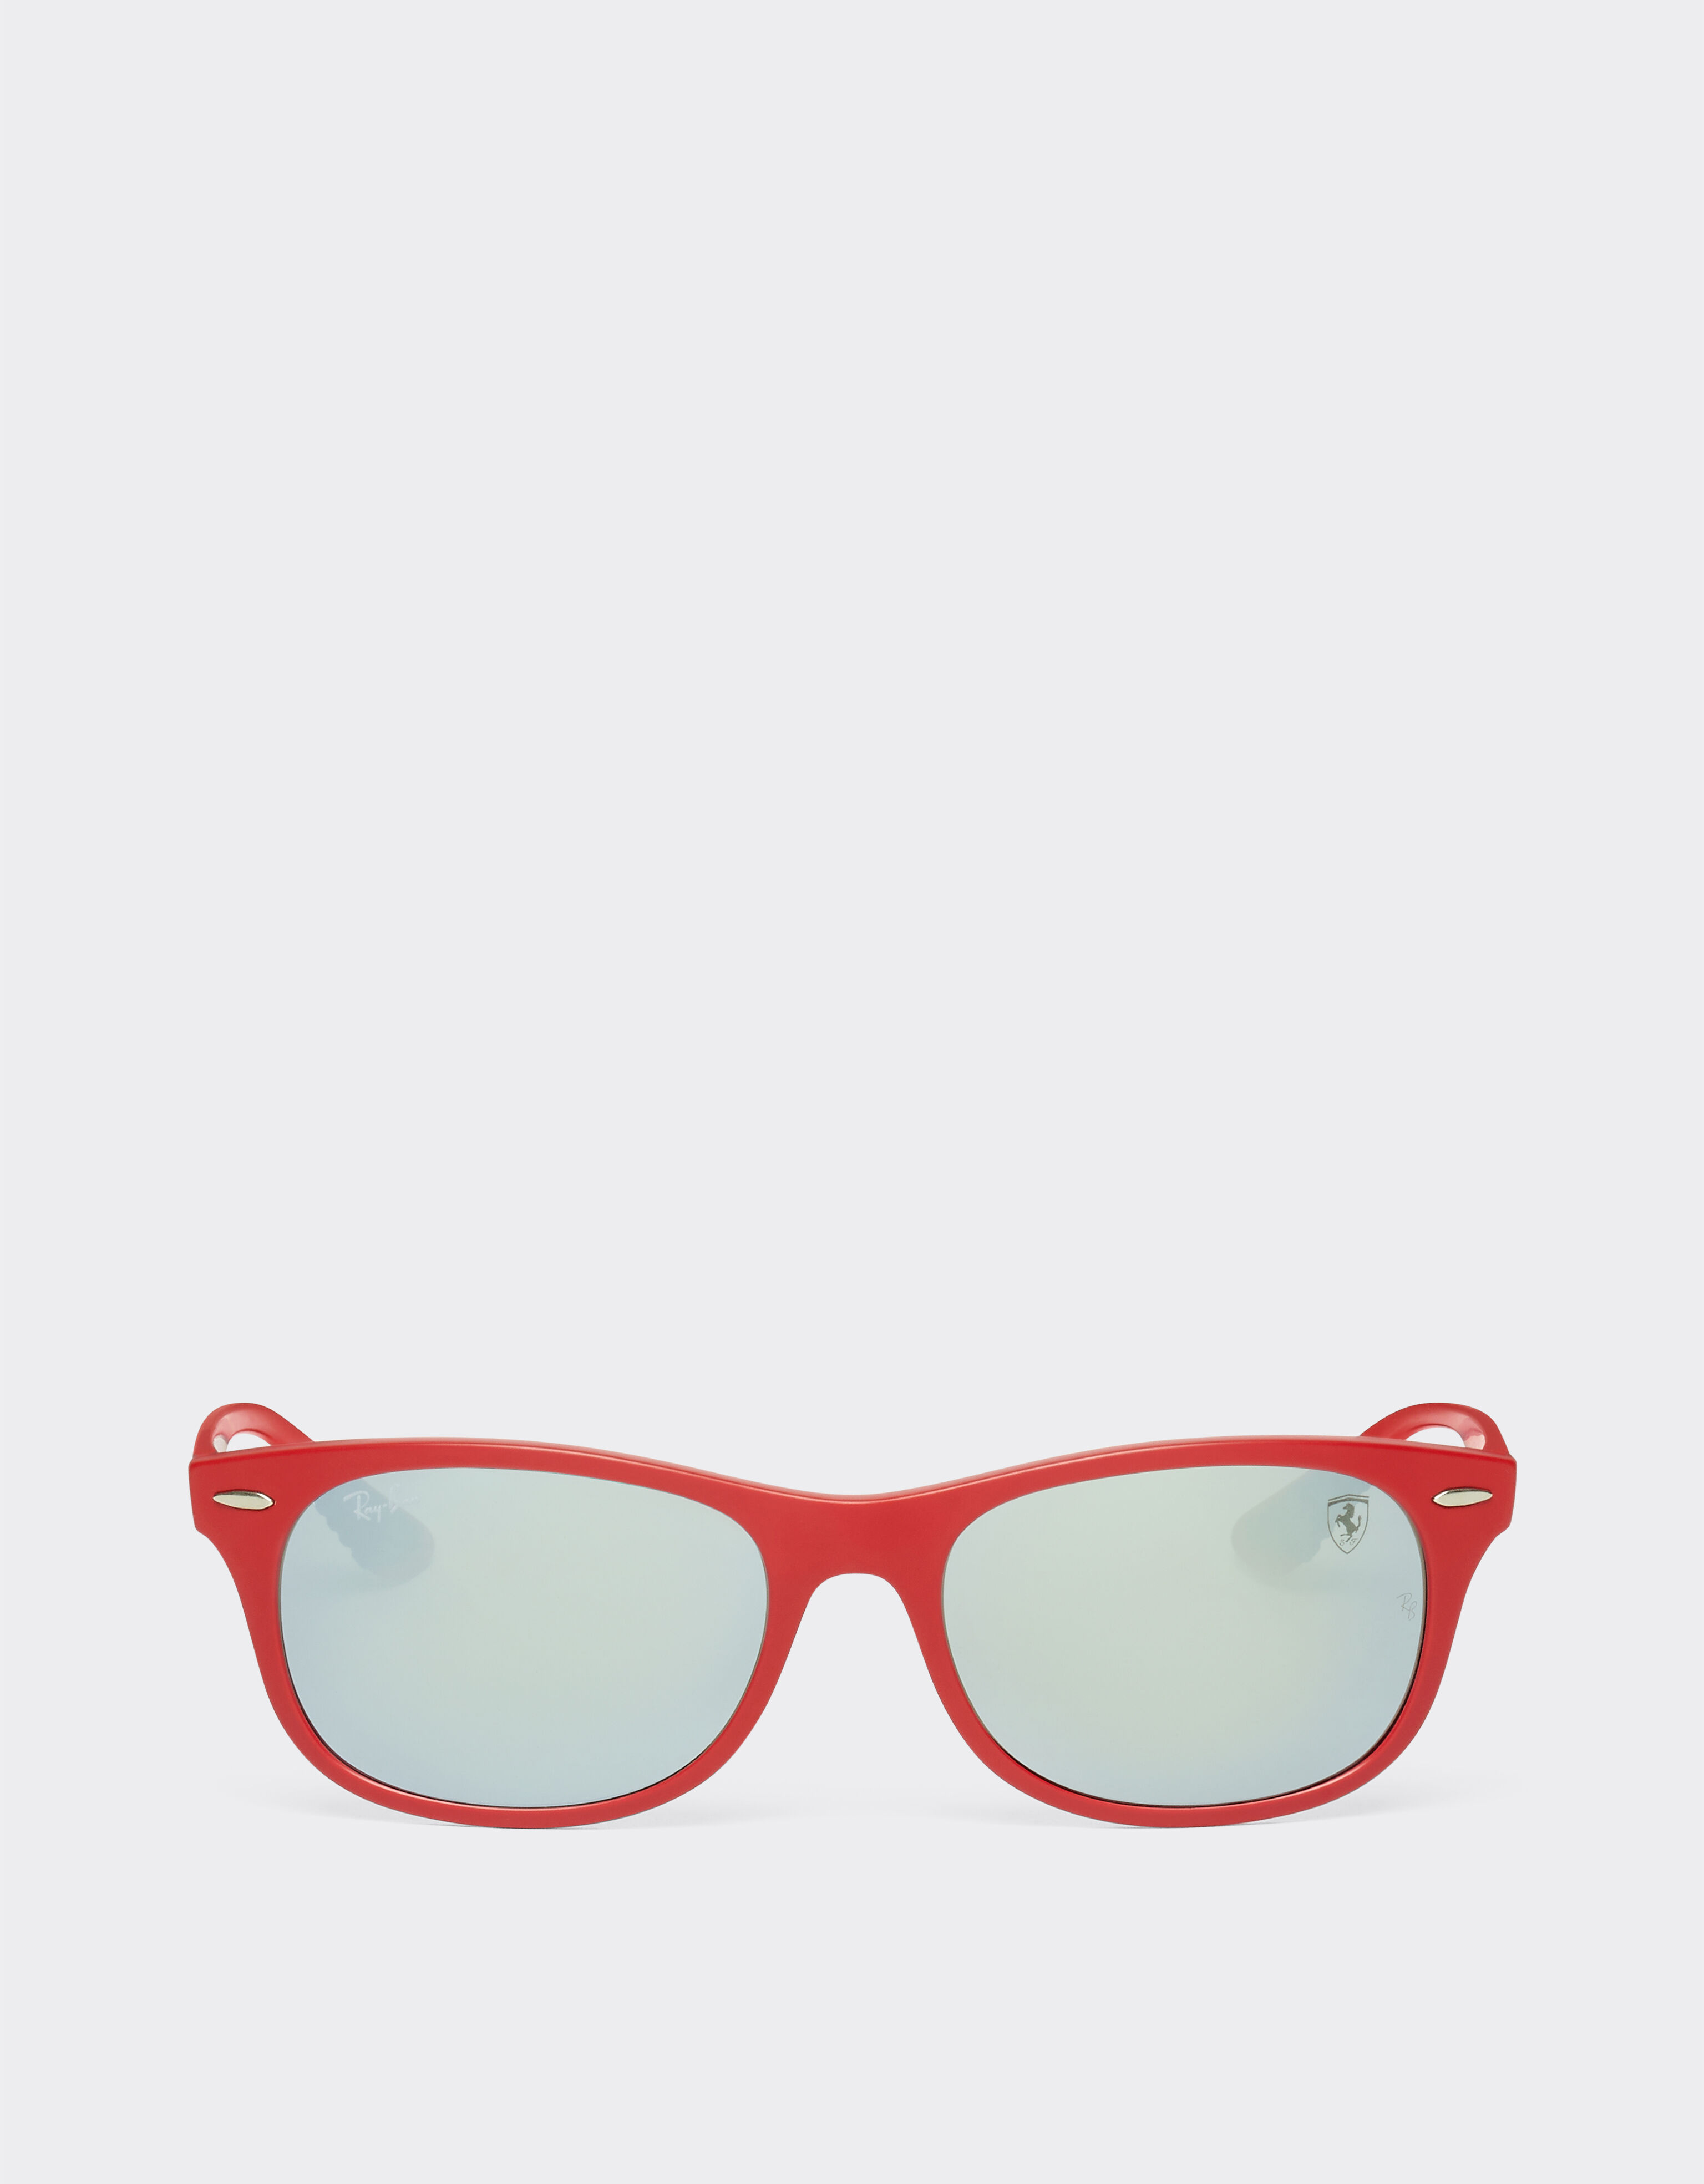 Ferrari Ray-Ban for Scuderia Ferrari 0RB4607M matt red sunglasses with silver mirror green lenses Optical White F1258f